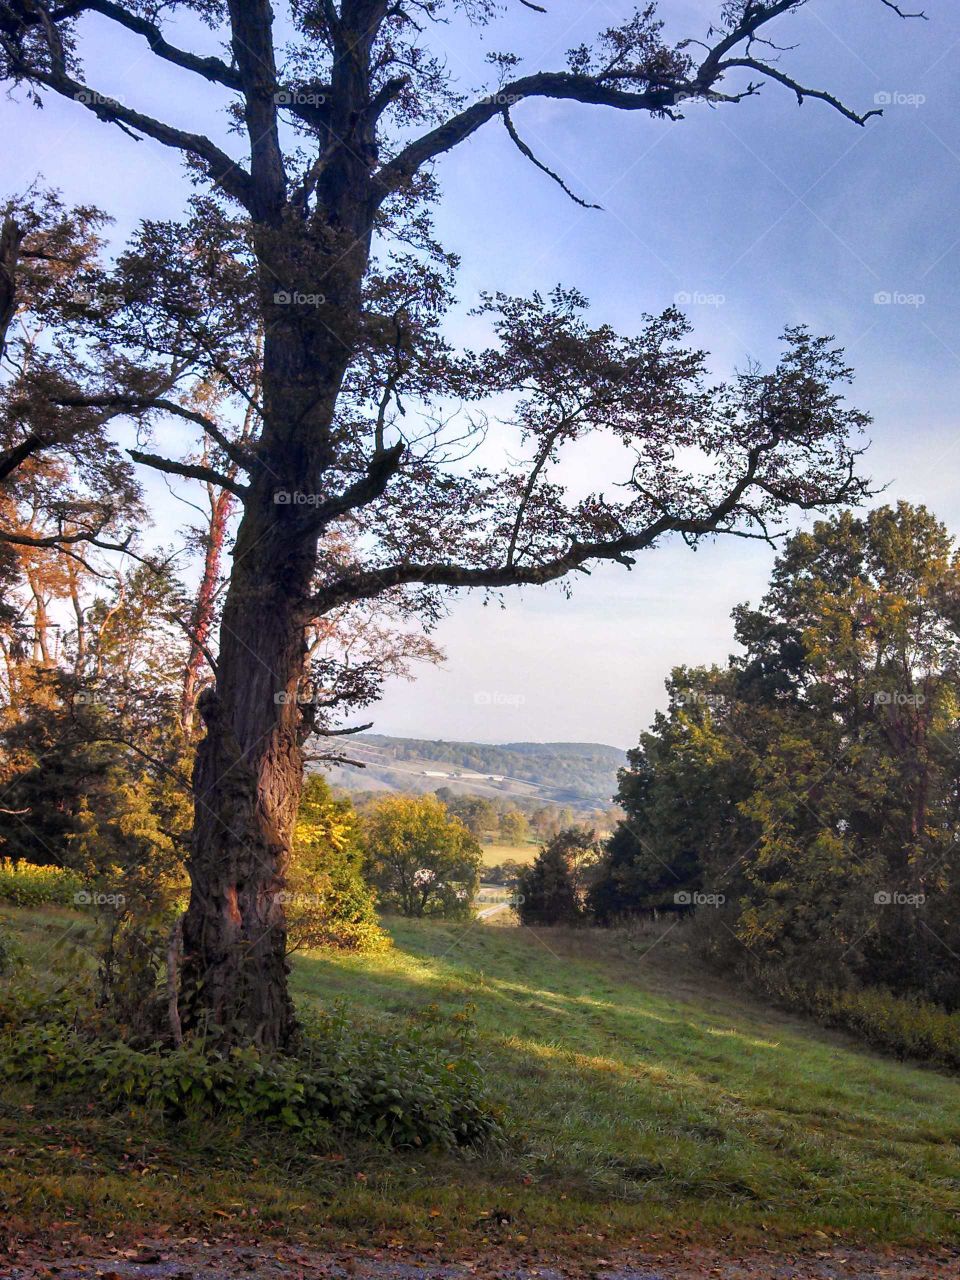 Overlooking the Blue Ridge